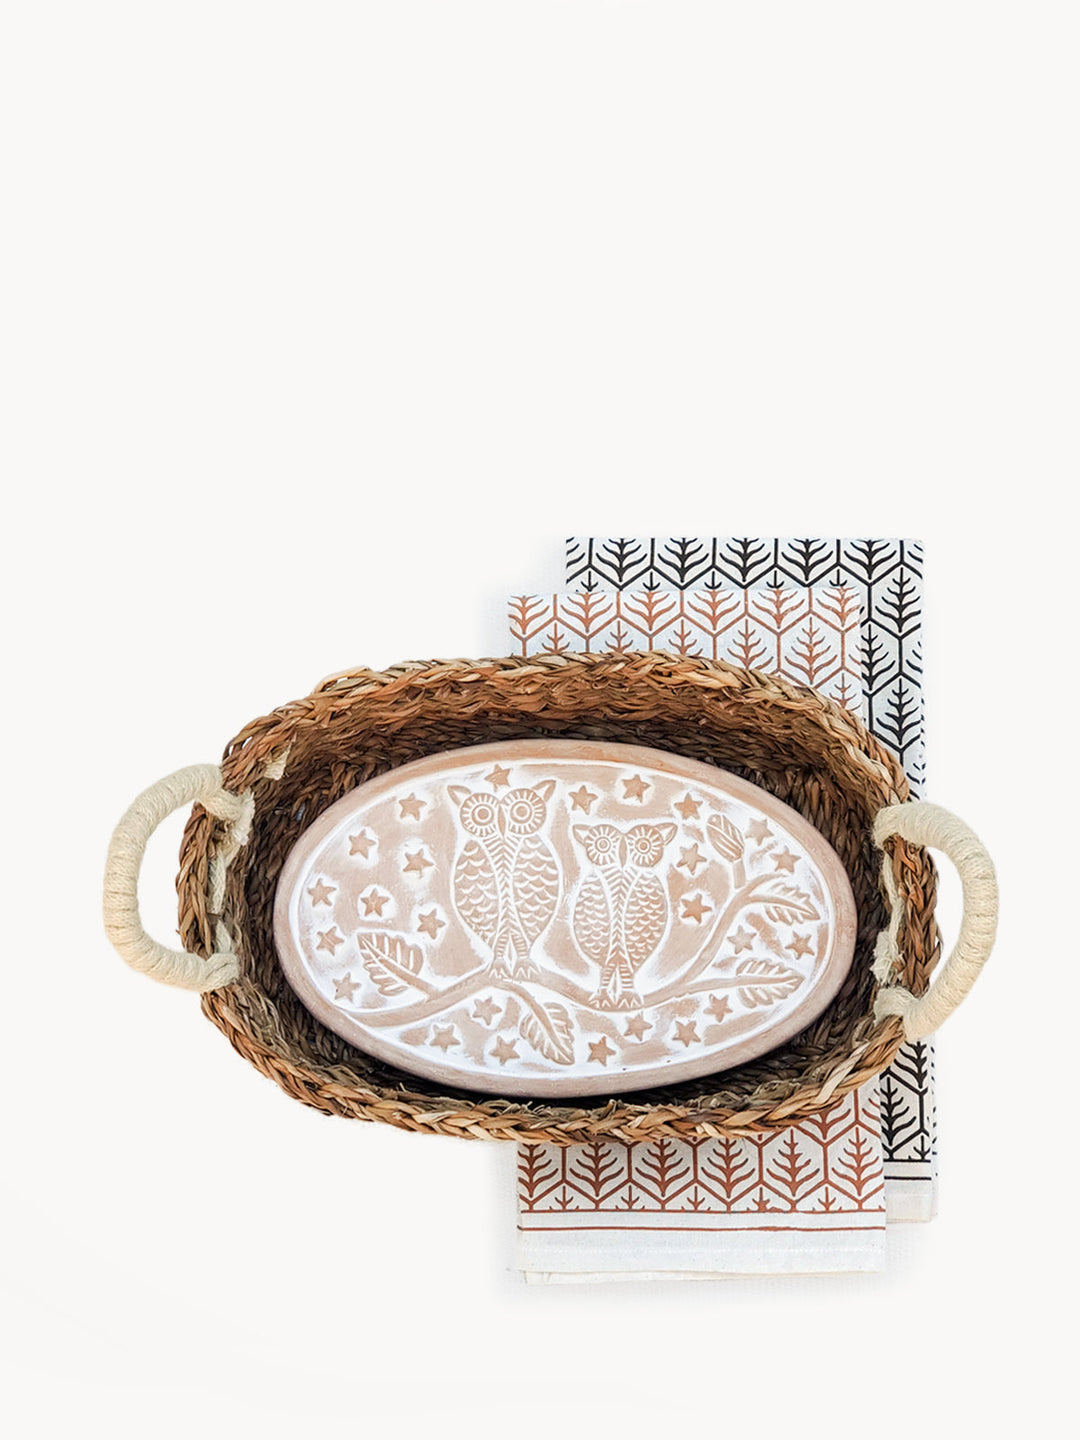 Bread Warmer & Basket Gift Set with Tea Towel - Owl Oval-0